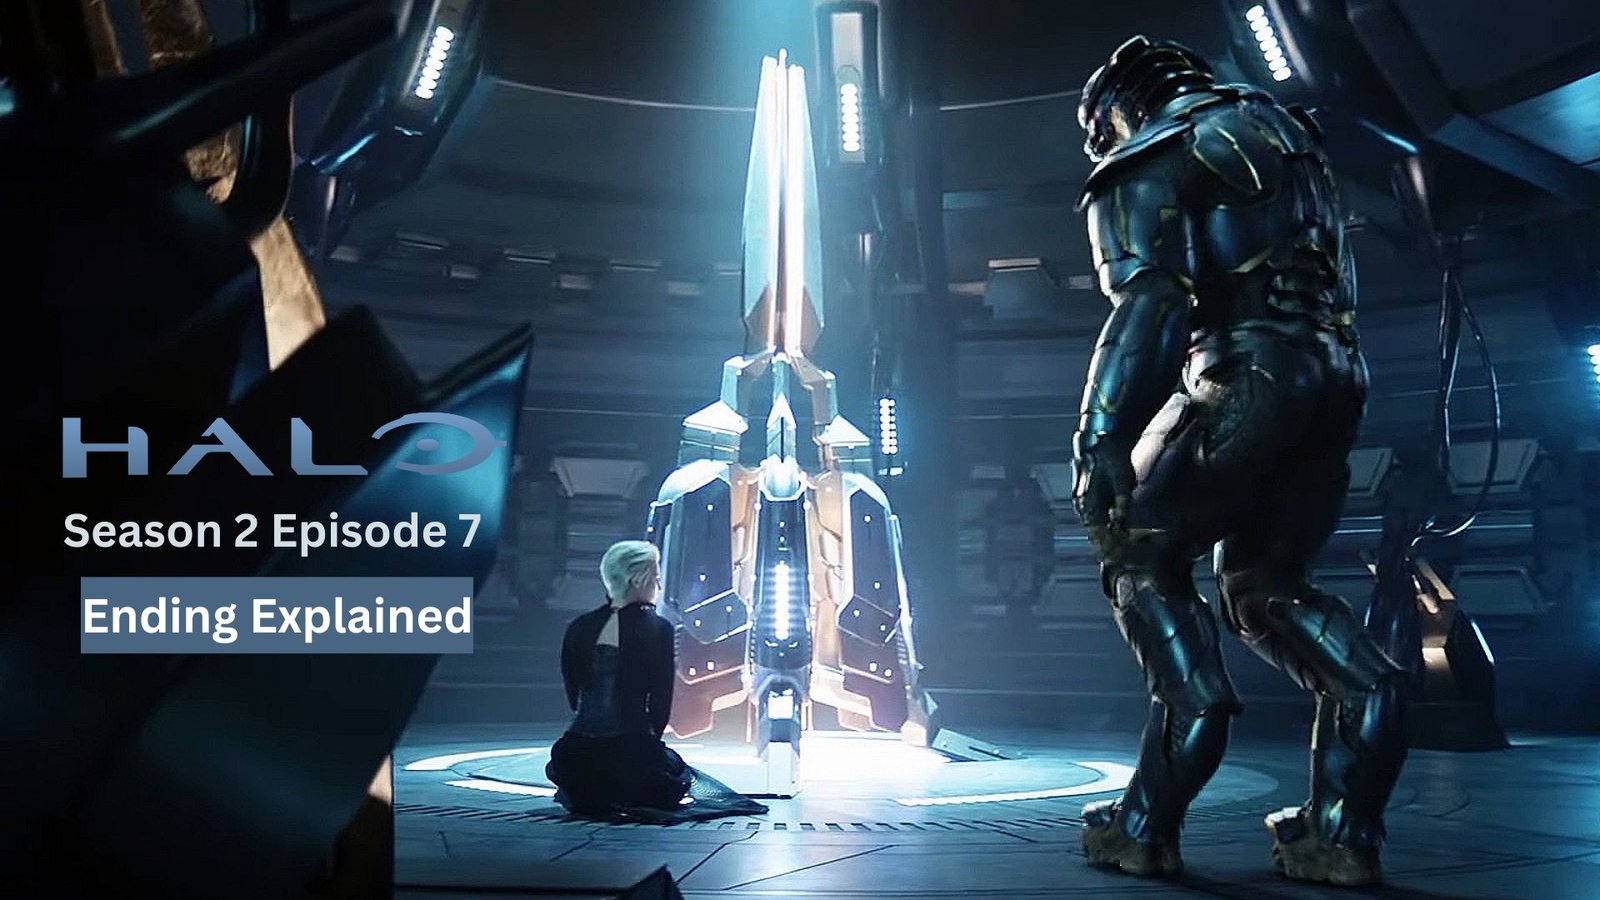 Halo Season 2 Episode 7 Ending Explained